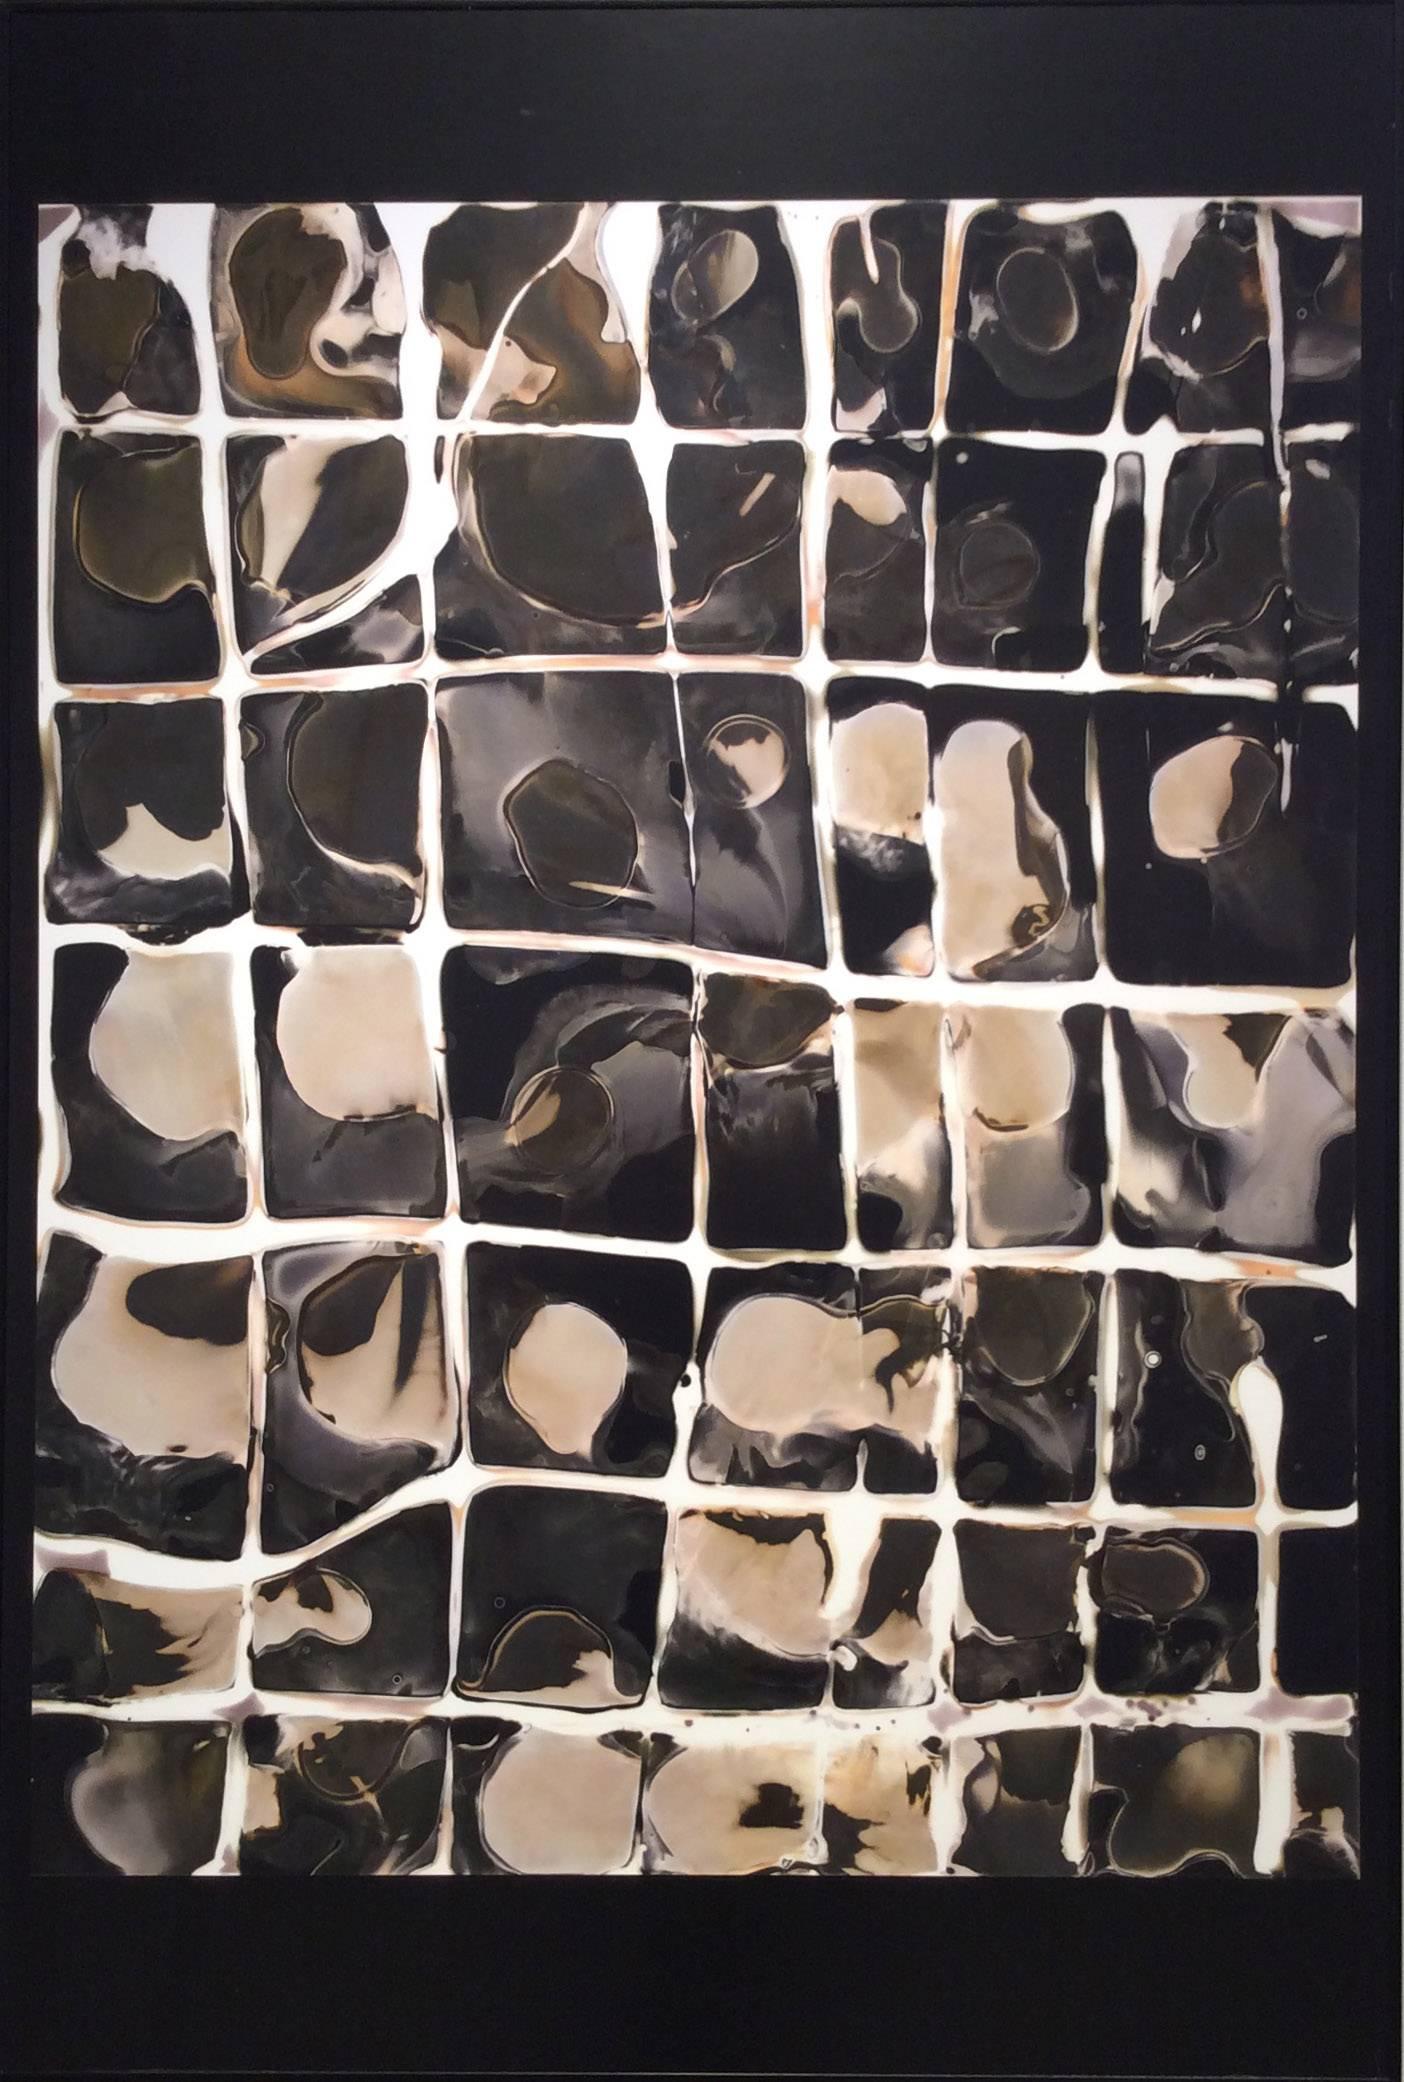 Grid Triptych (Abstract Digital Prints) - Photograph by Birgit Blyth